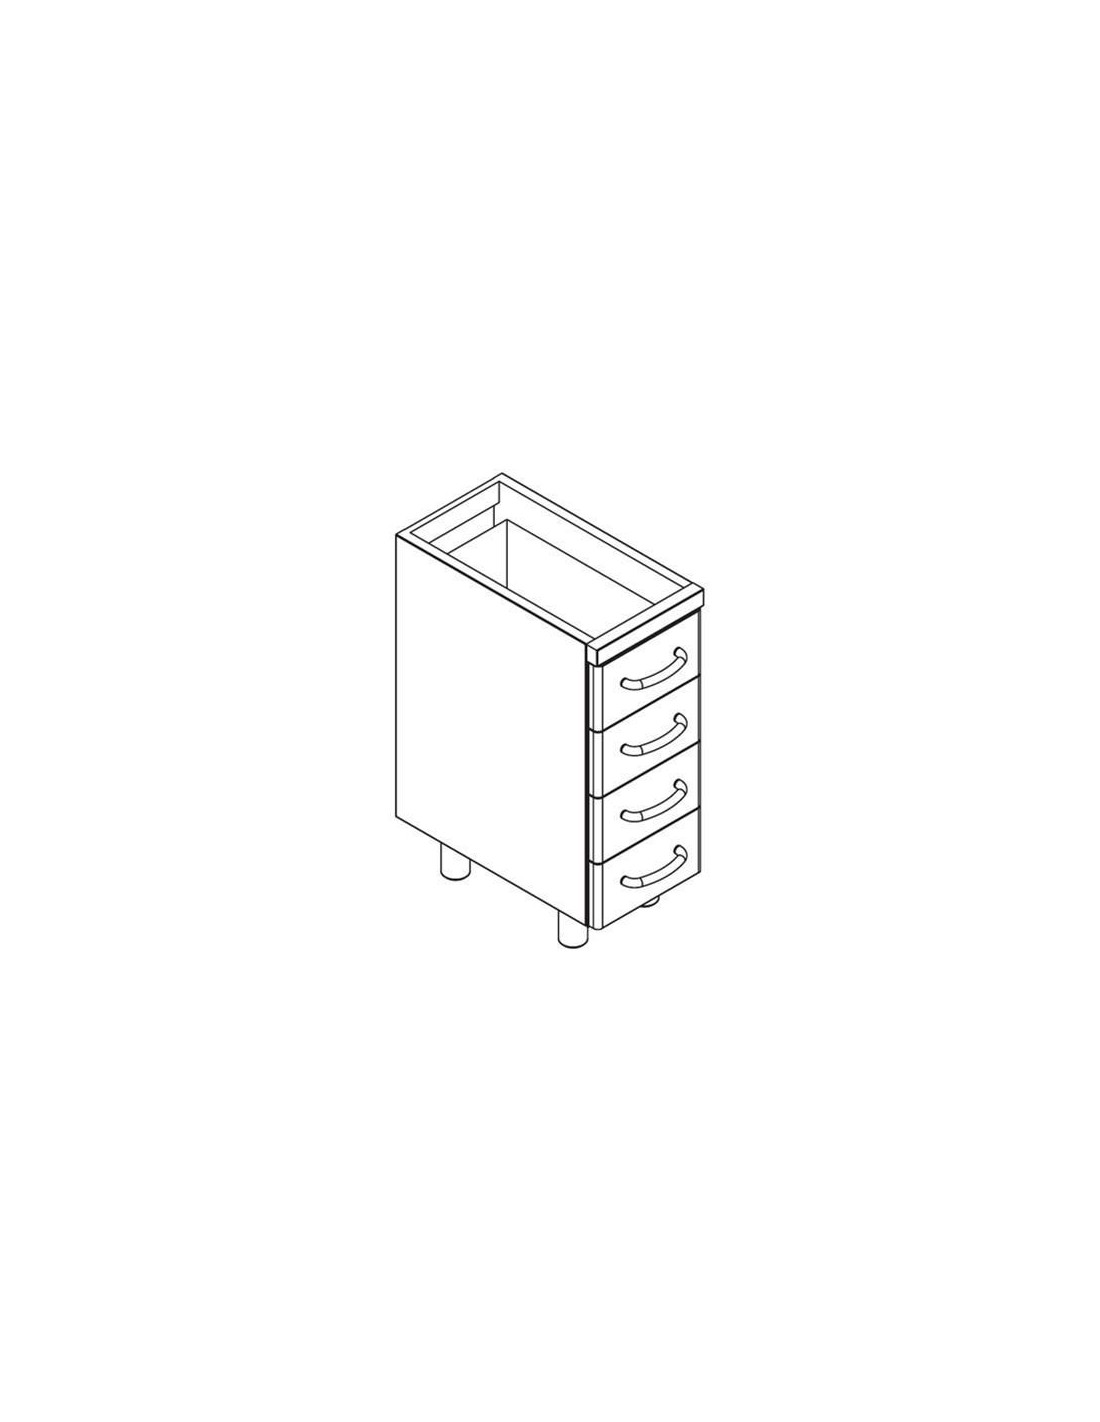 MOBILE BASE - No. 4 drawers 21.8 cm x 52 x H 8.9 - Dimensions 30 x 56.6 x 79 cm